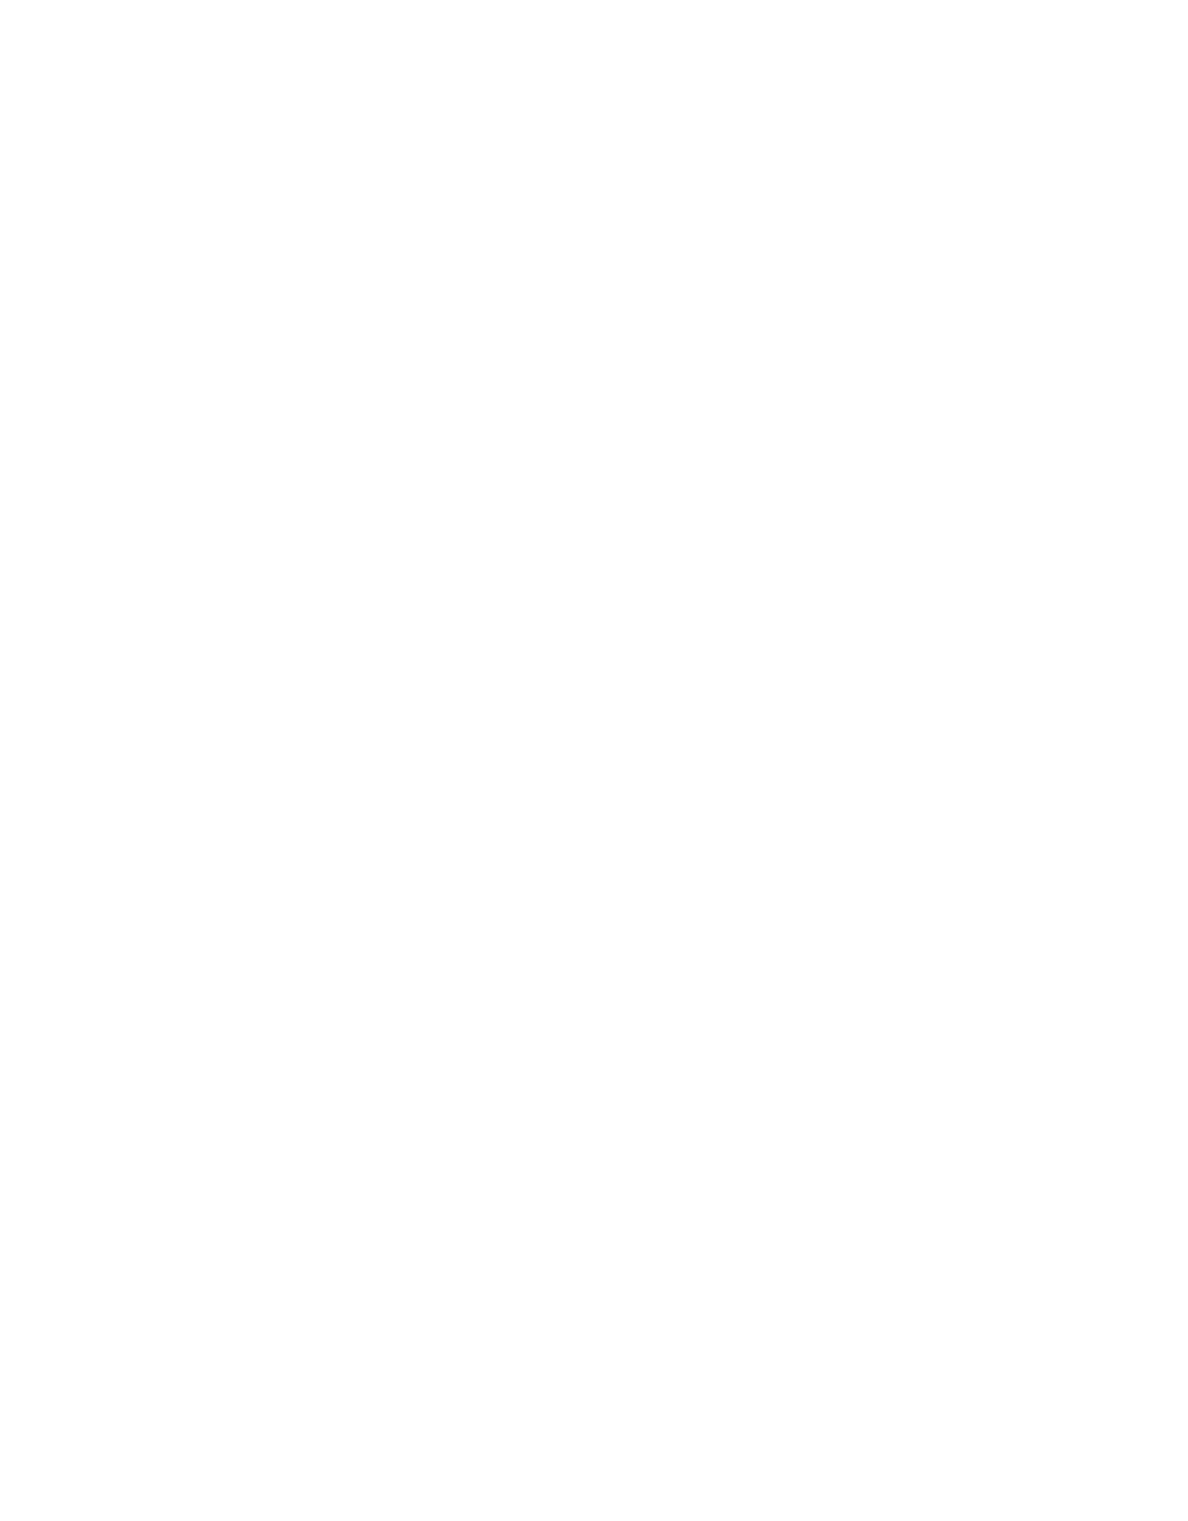 Arctic Paper logo for dark backgrounds (transparent PNG)